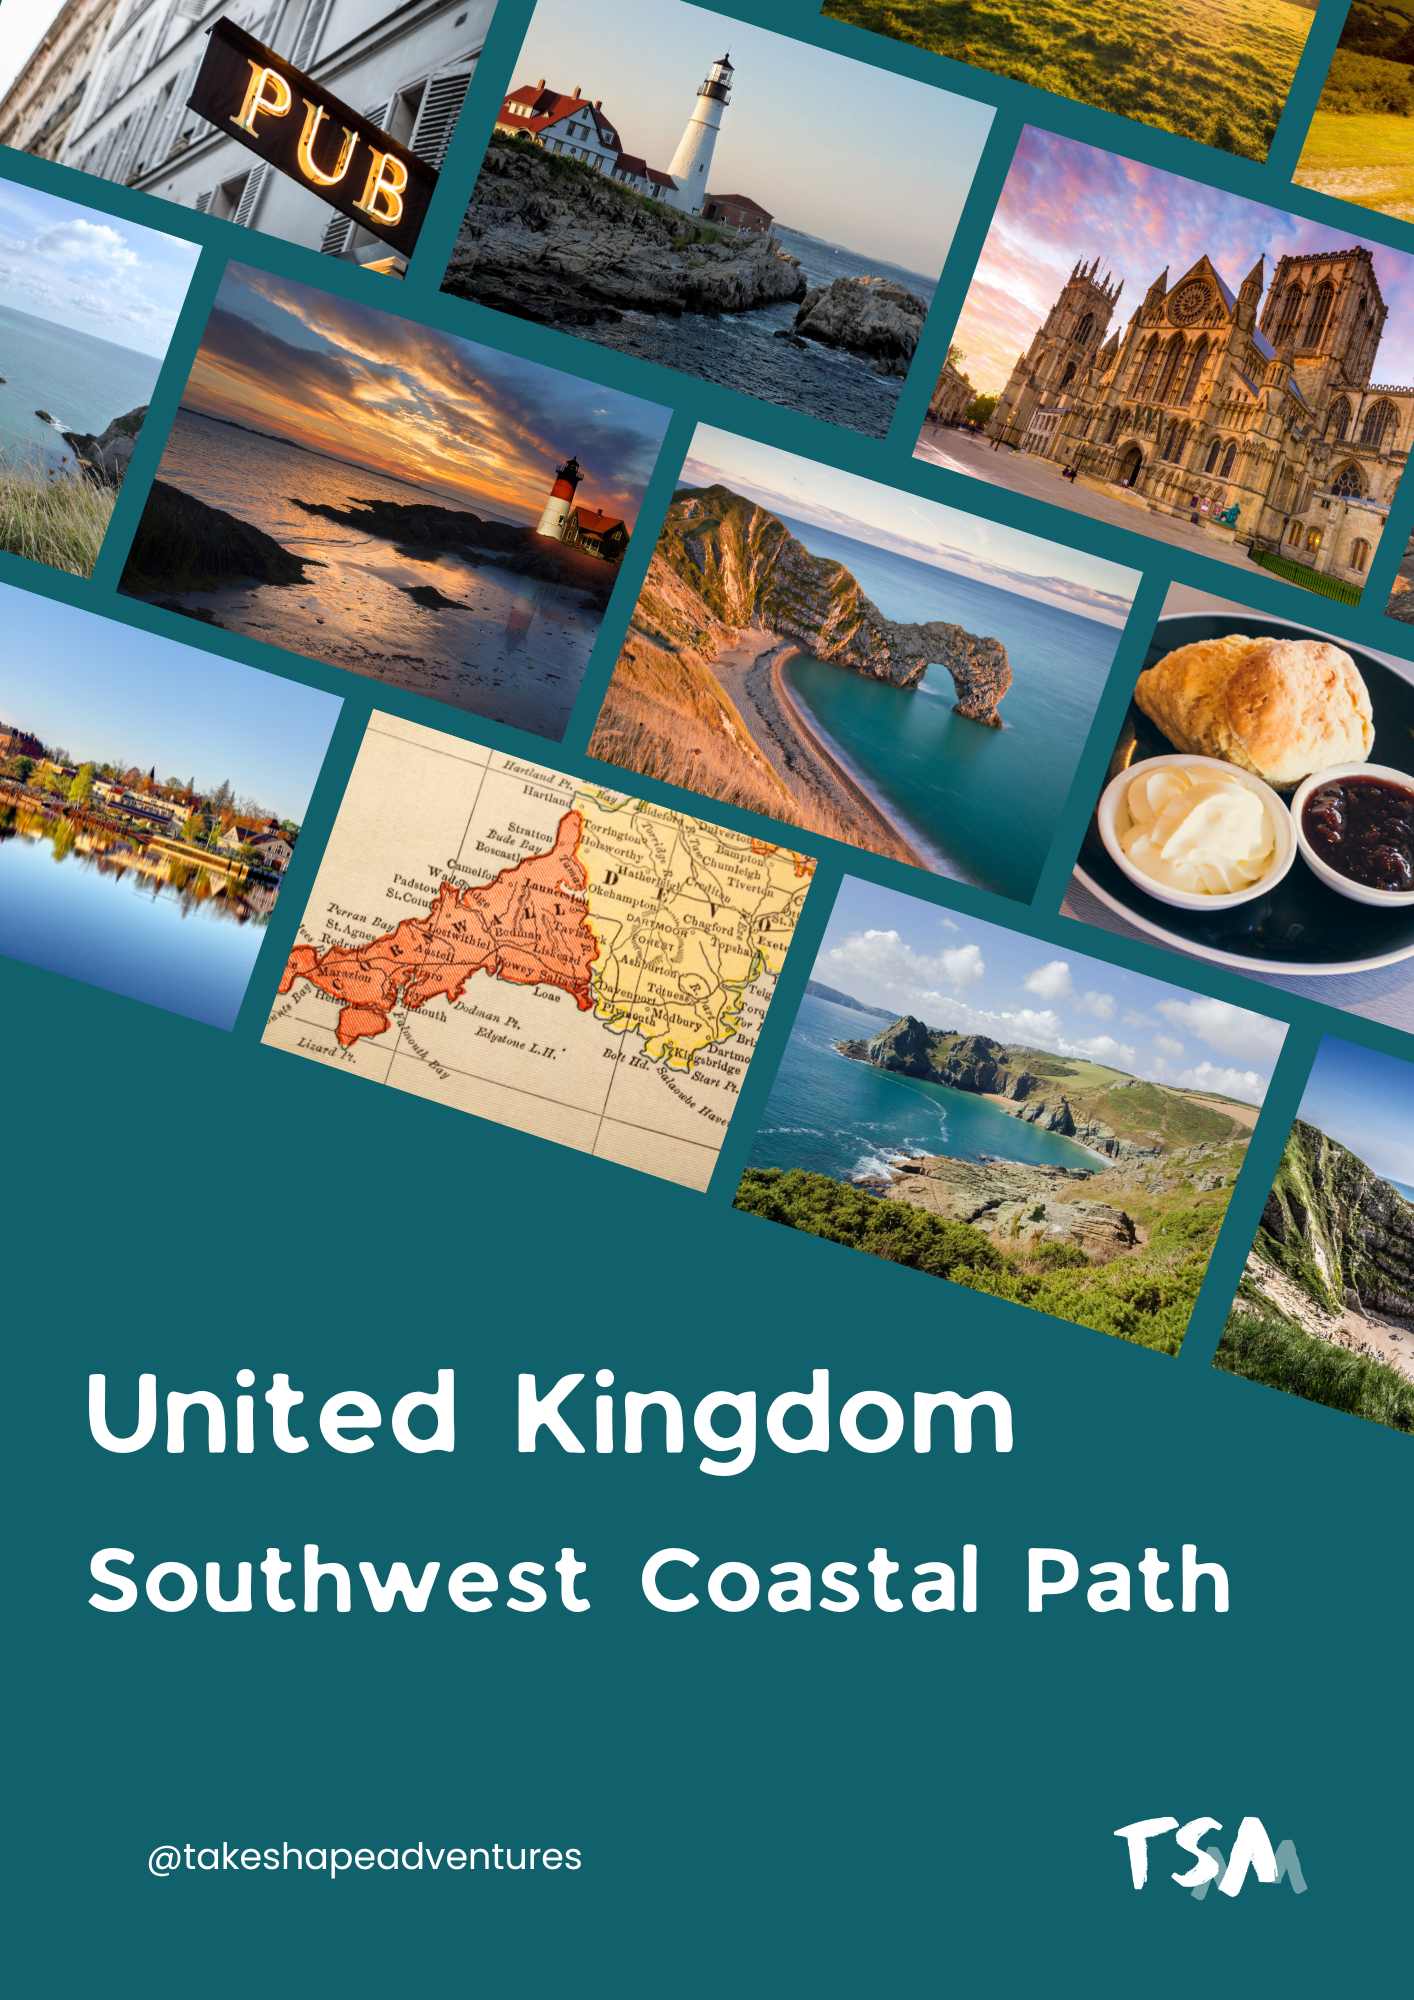 South West Coastal Path UK brochure